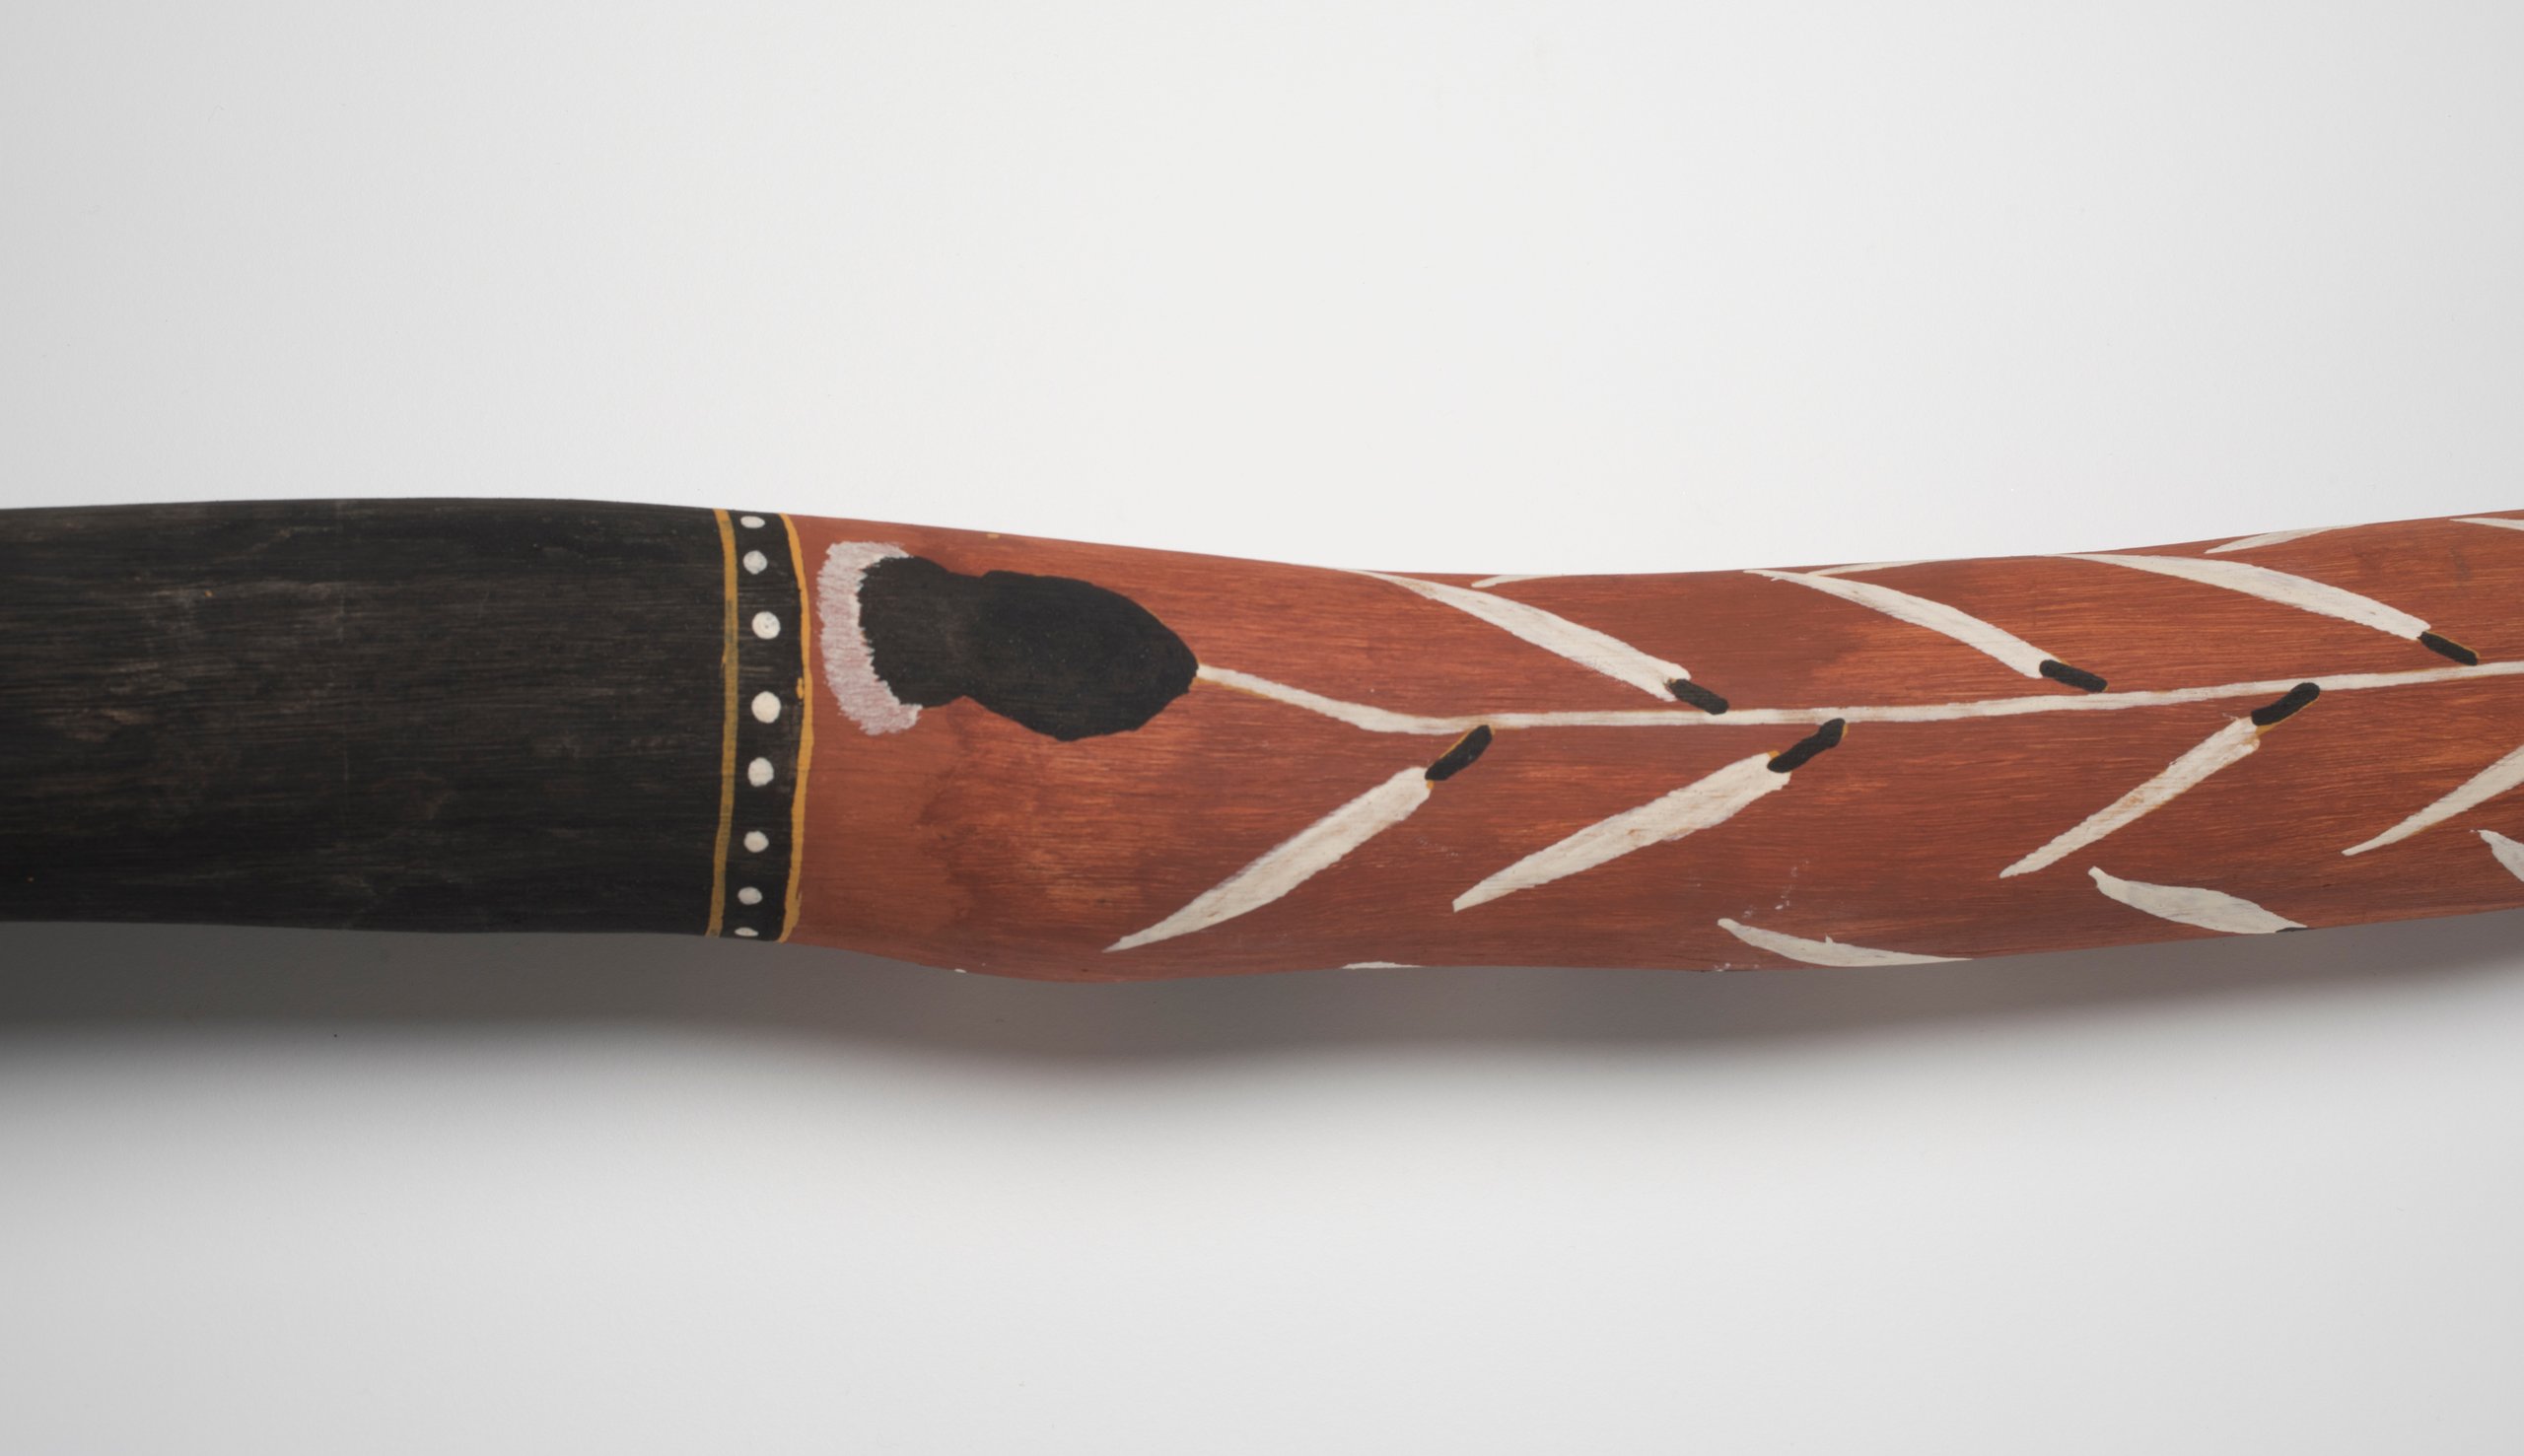 Didgeridoo (didjeridu), made and decorated by Gerard Yirawala